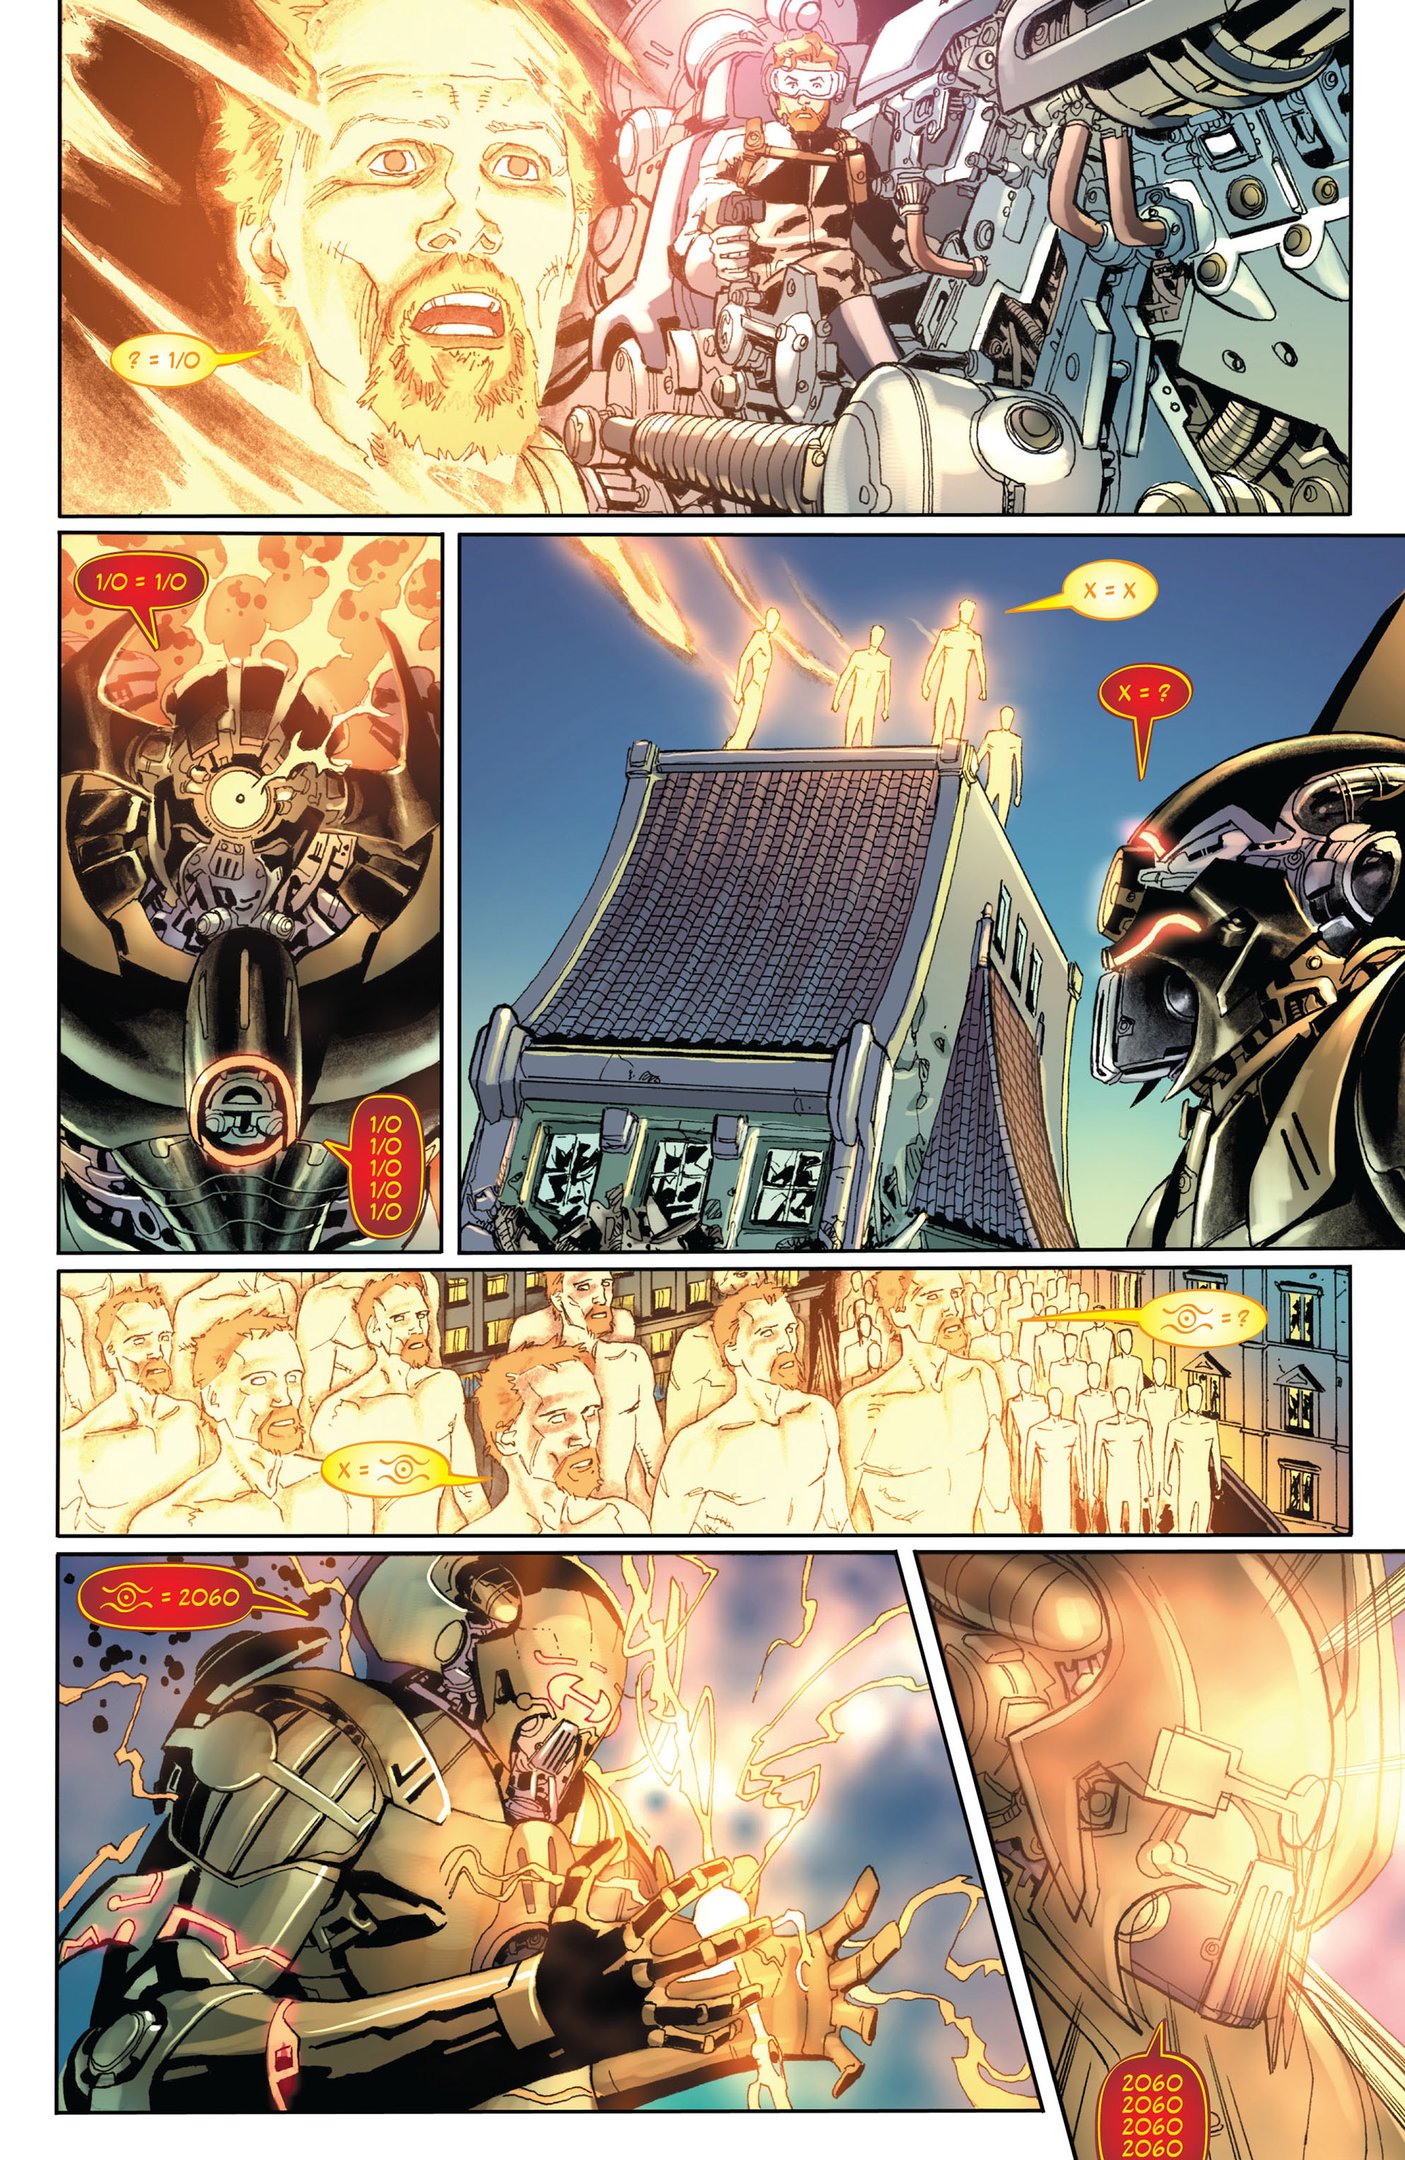 shield marvel comics